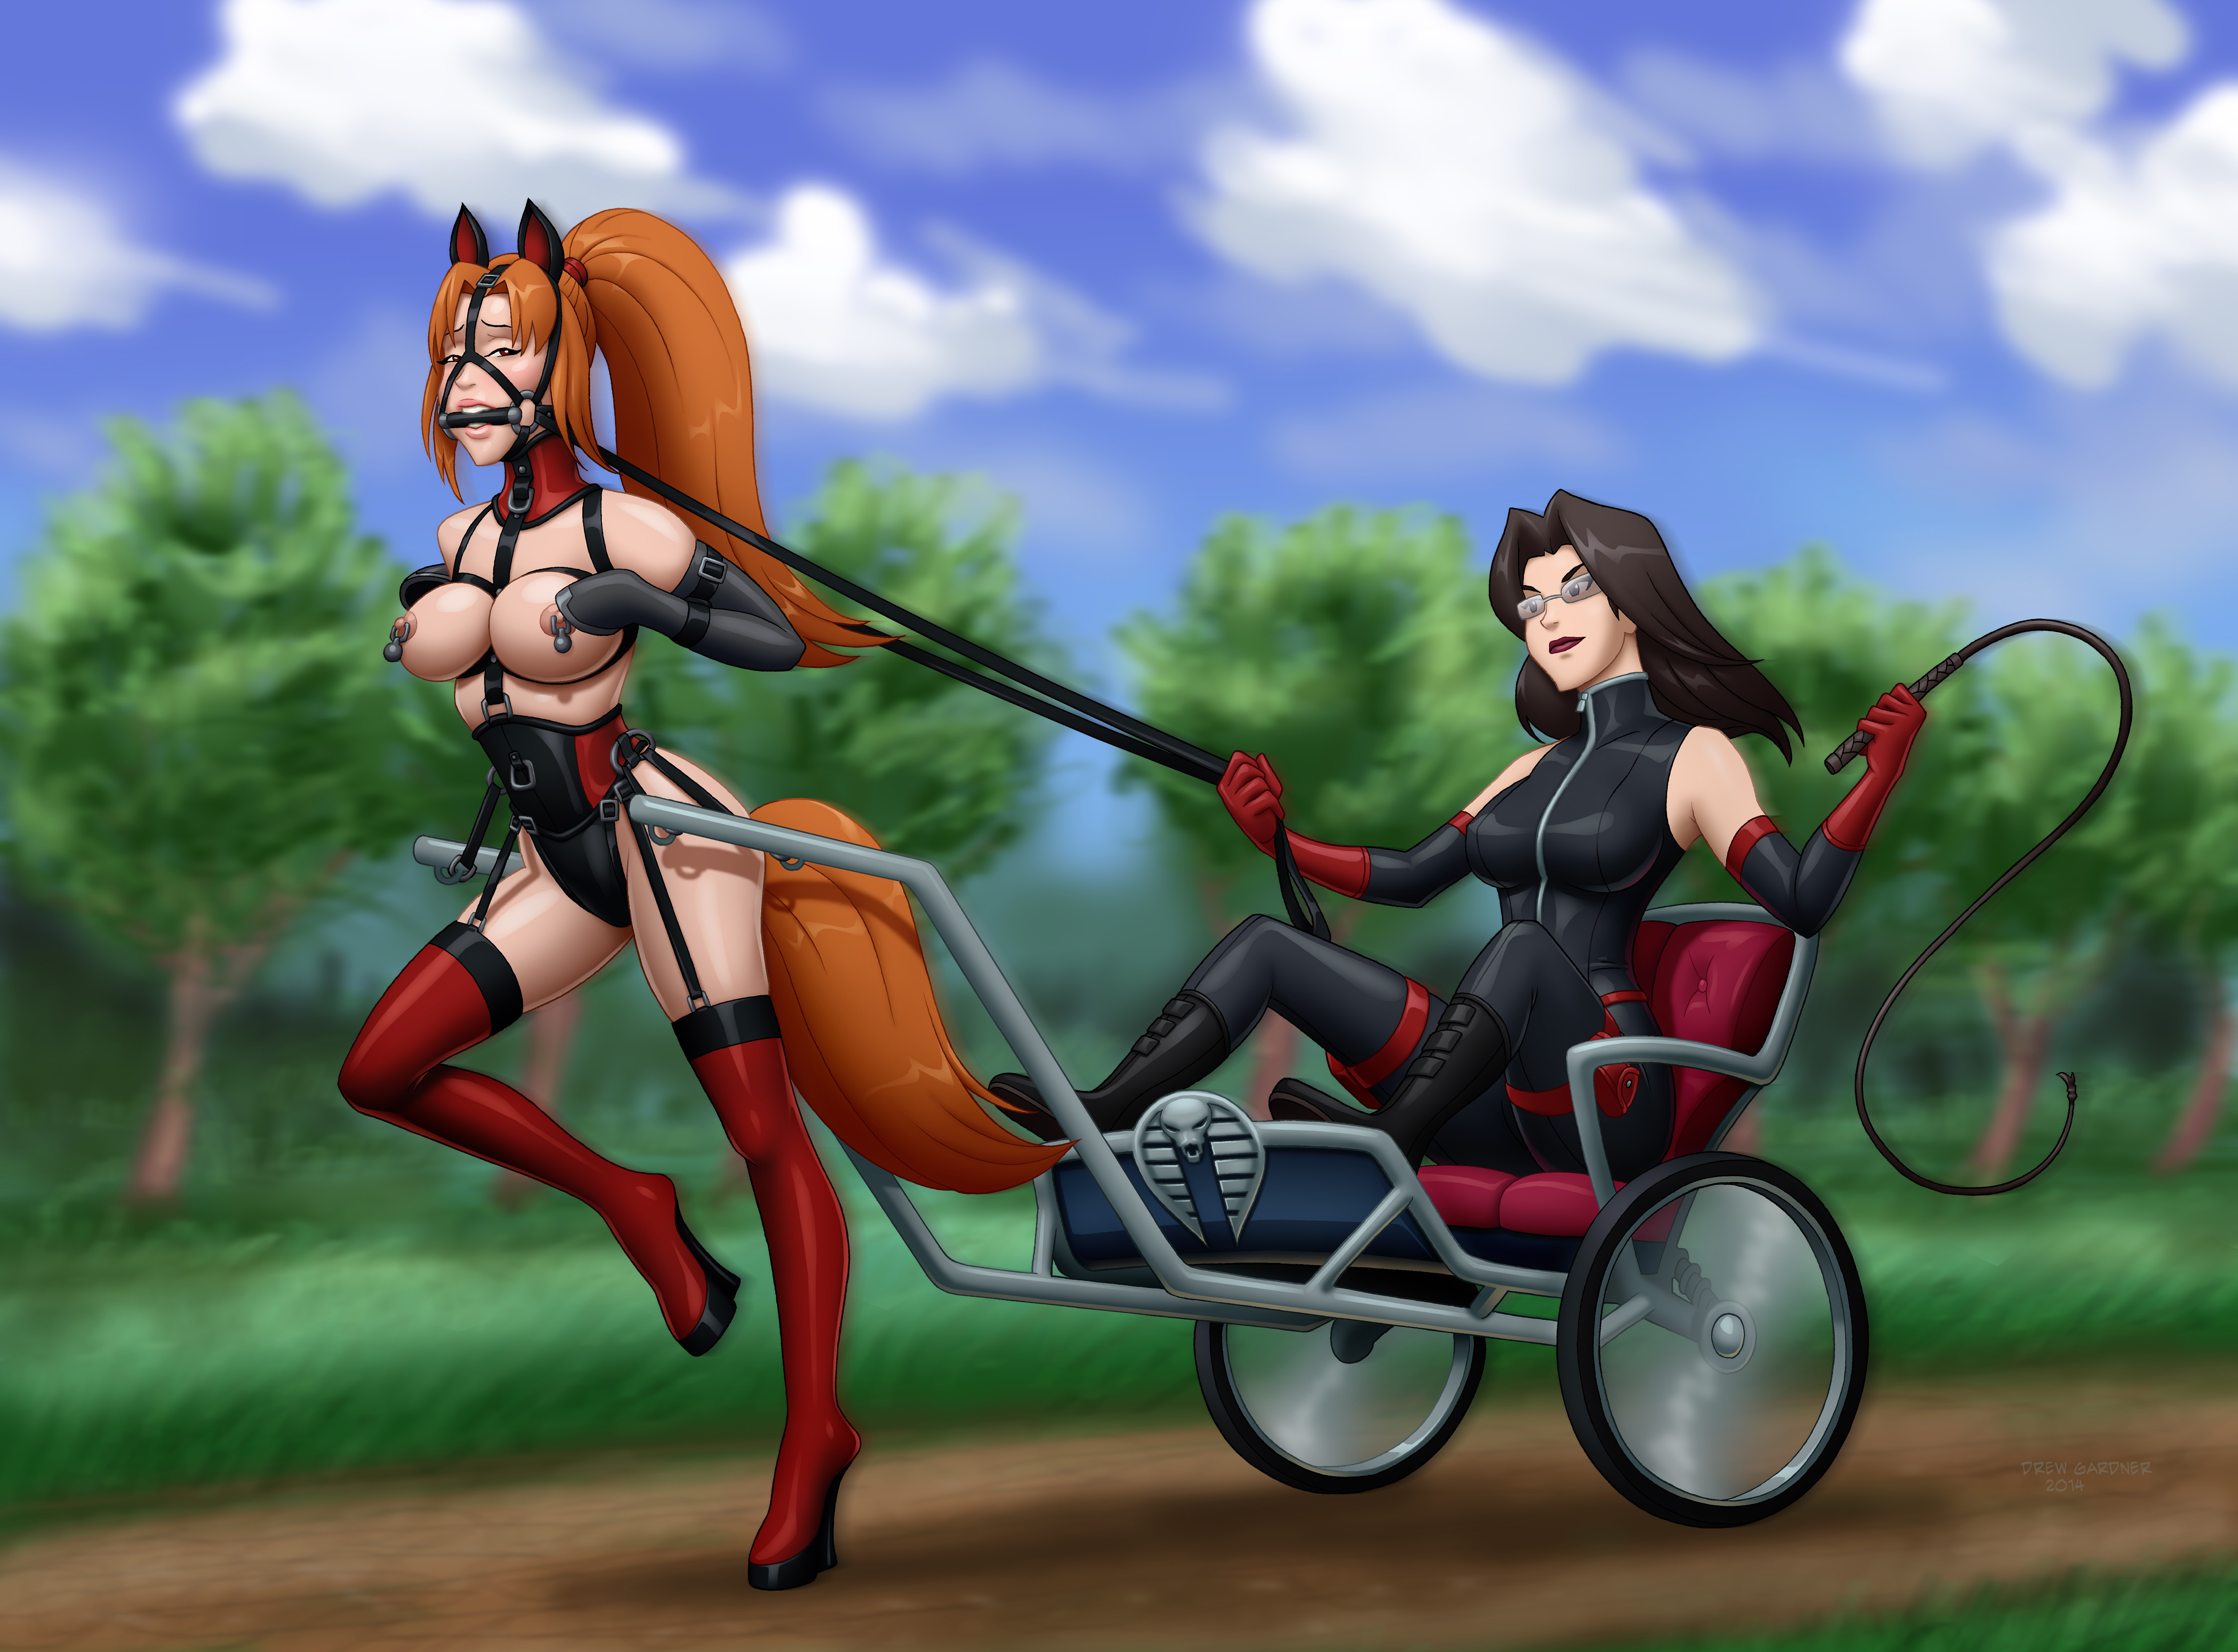 Bdsm 2 ponygirls pulling a cart